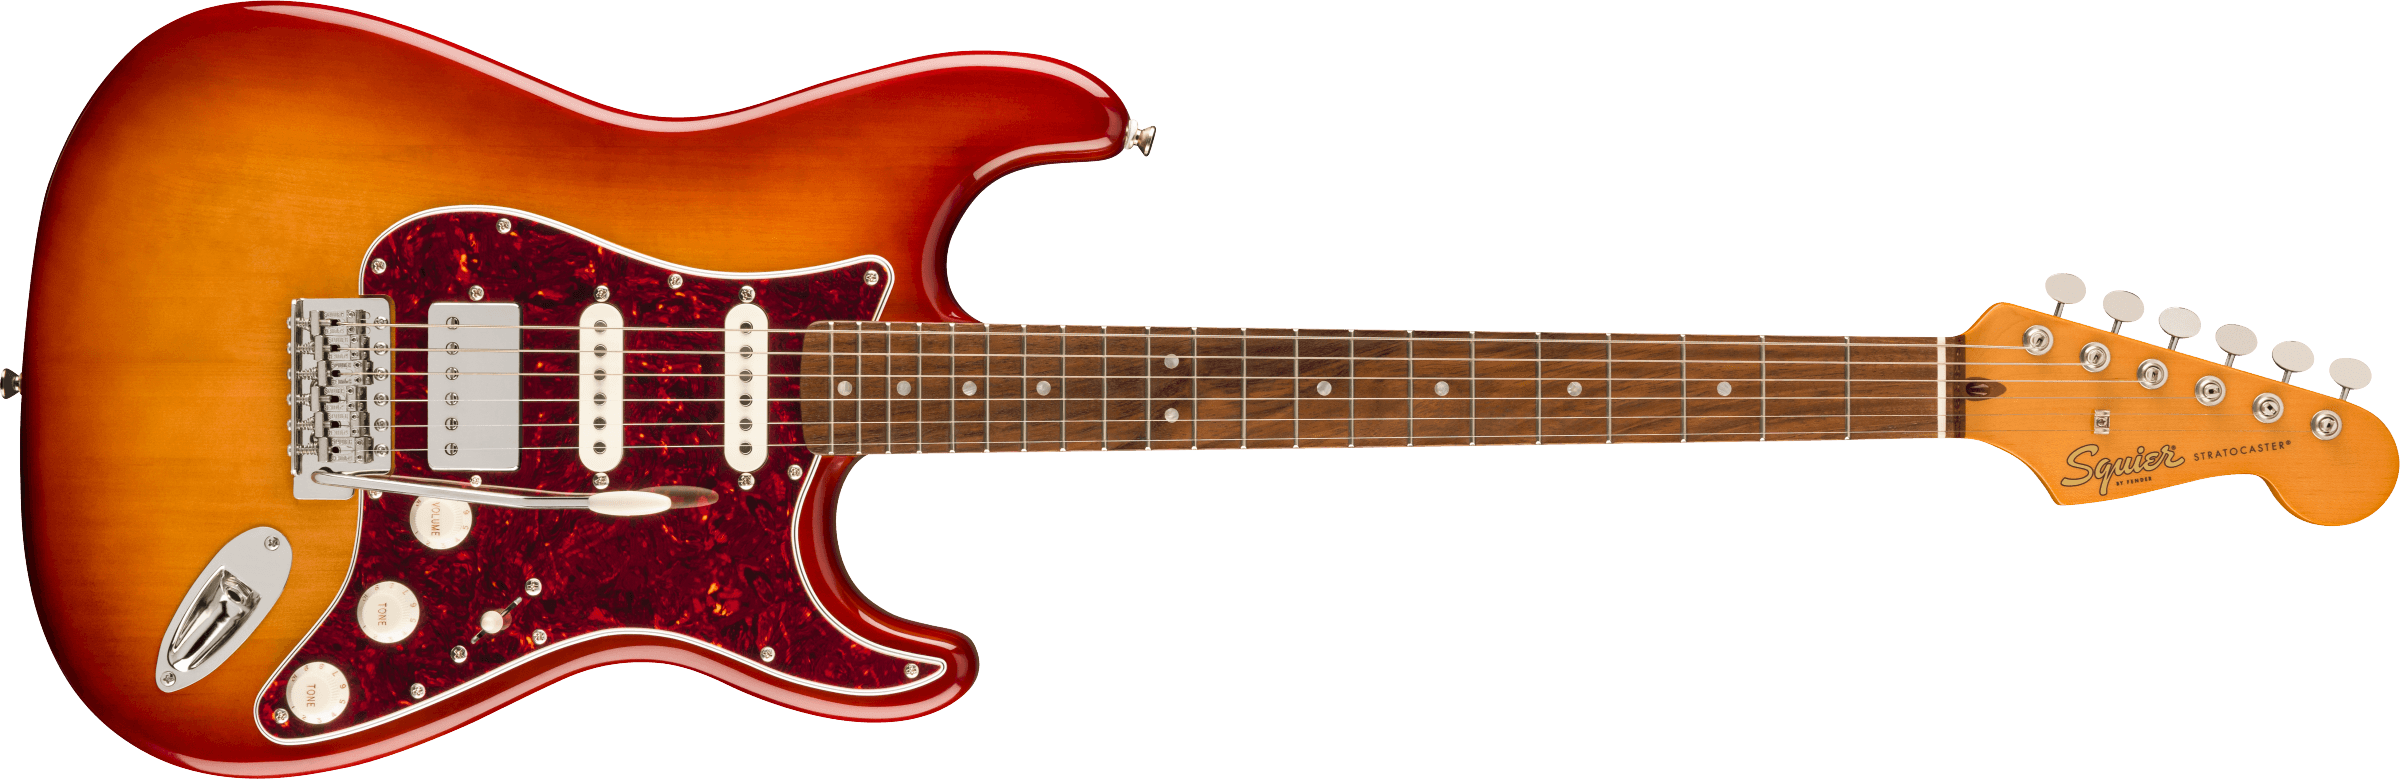 SQUIER - Ltd. Classic Vibe 60's Stratocaster HSS Sienna Sunburst